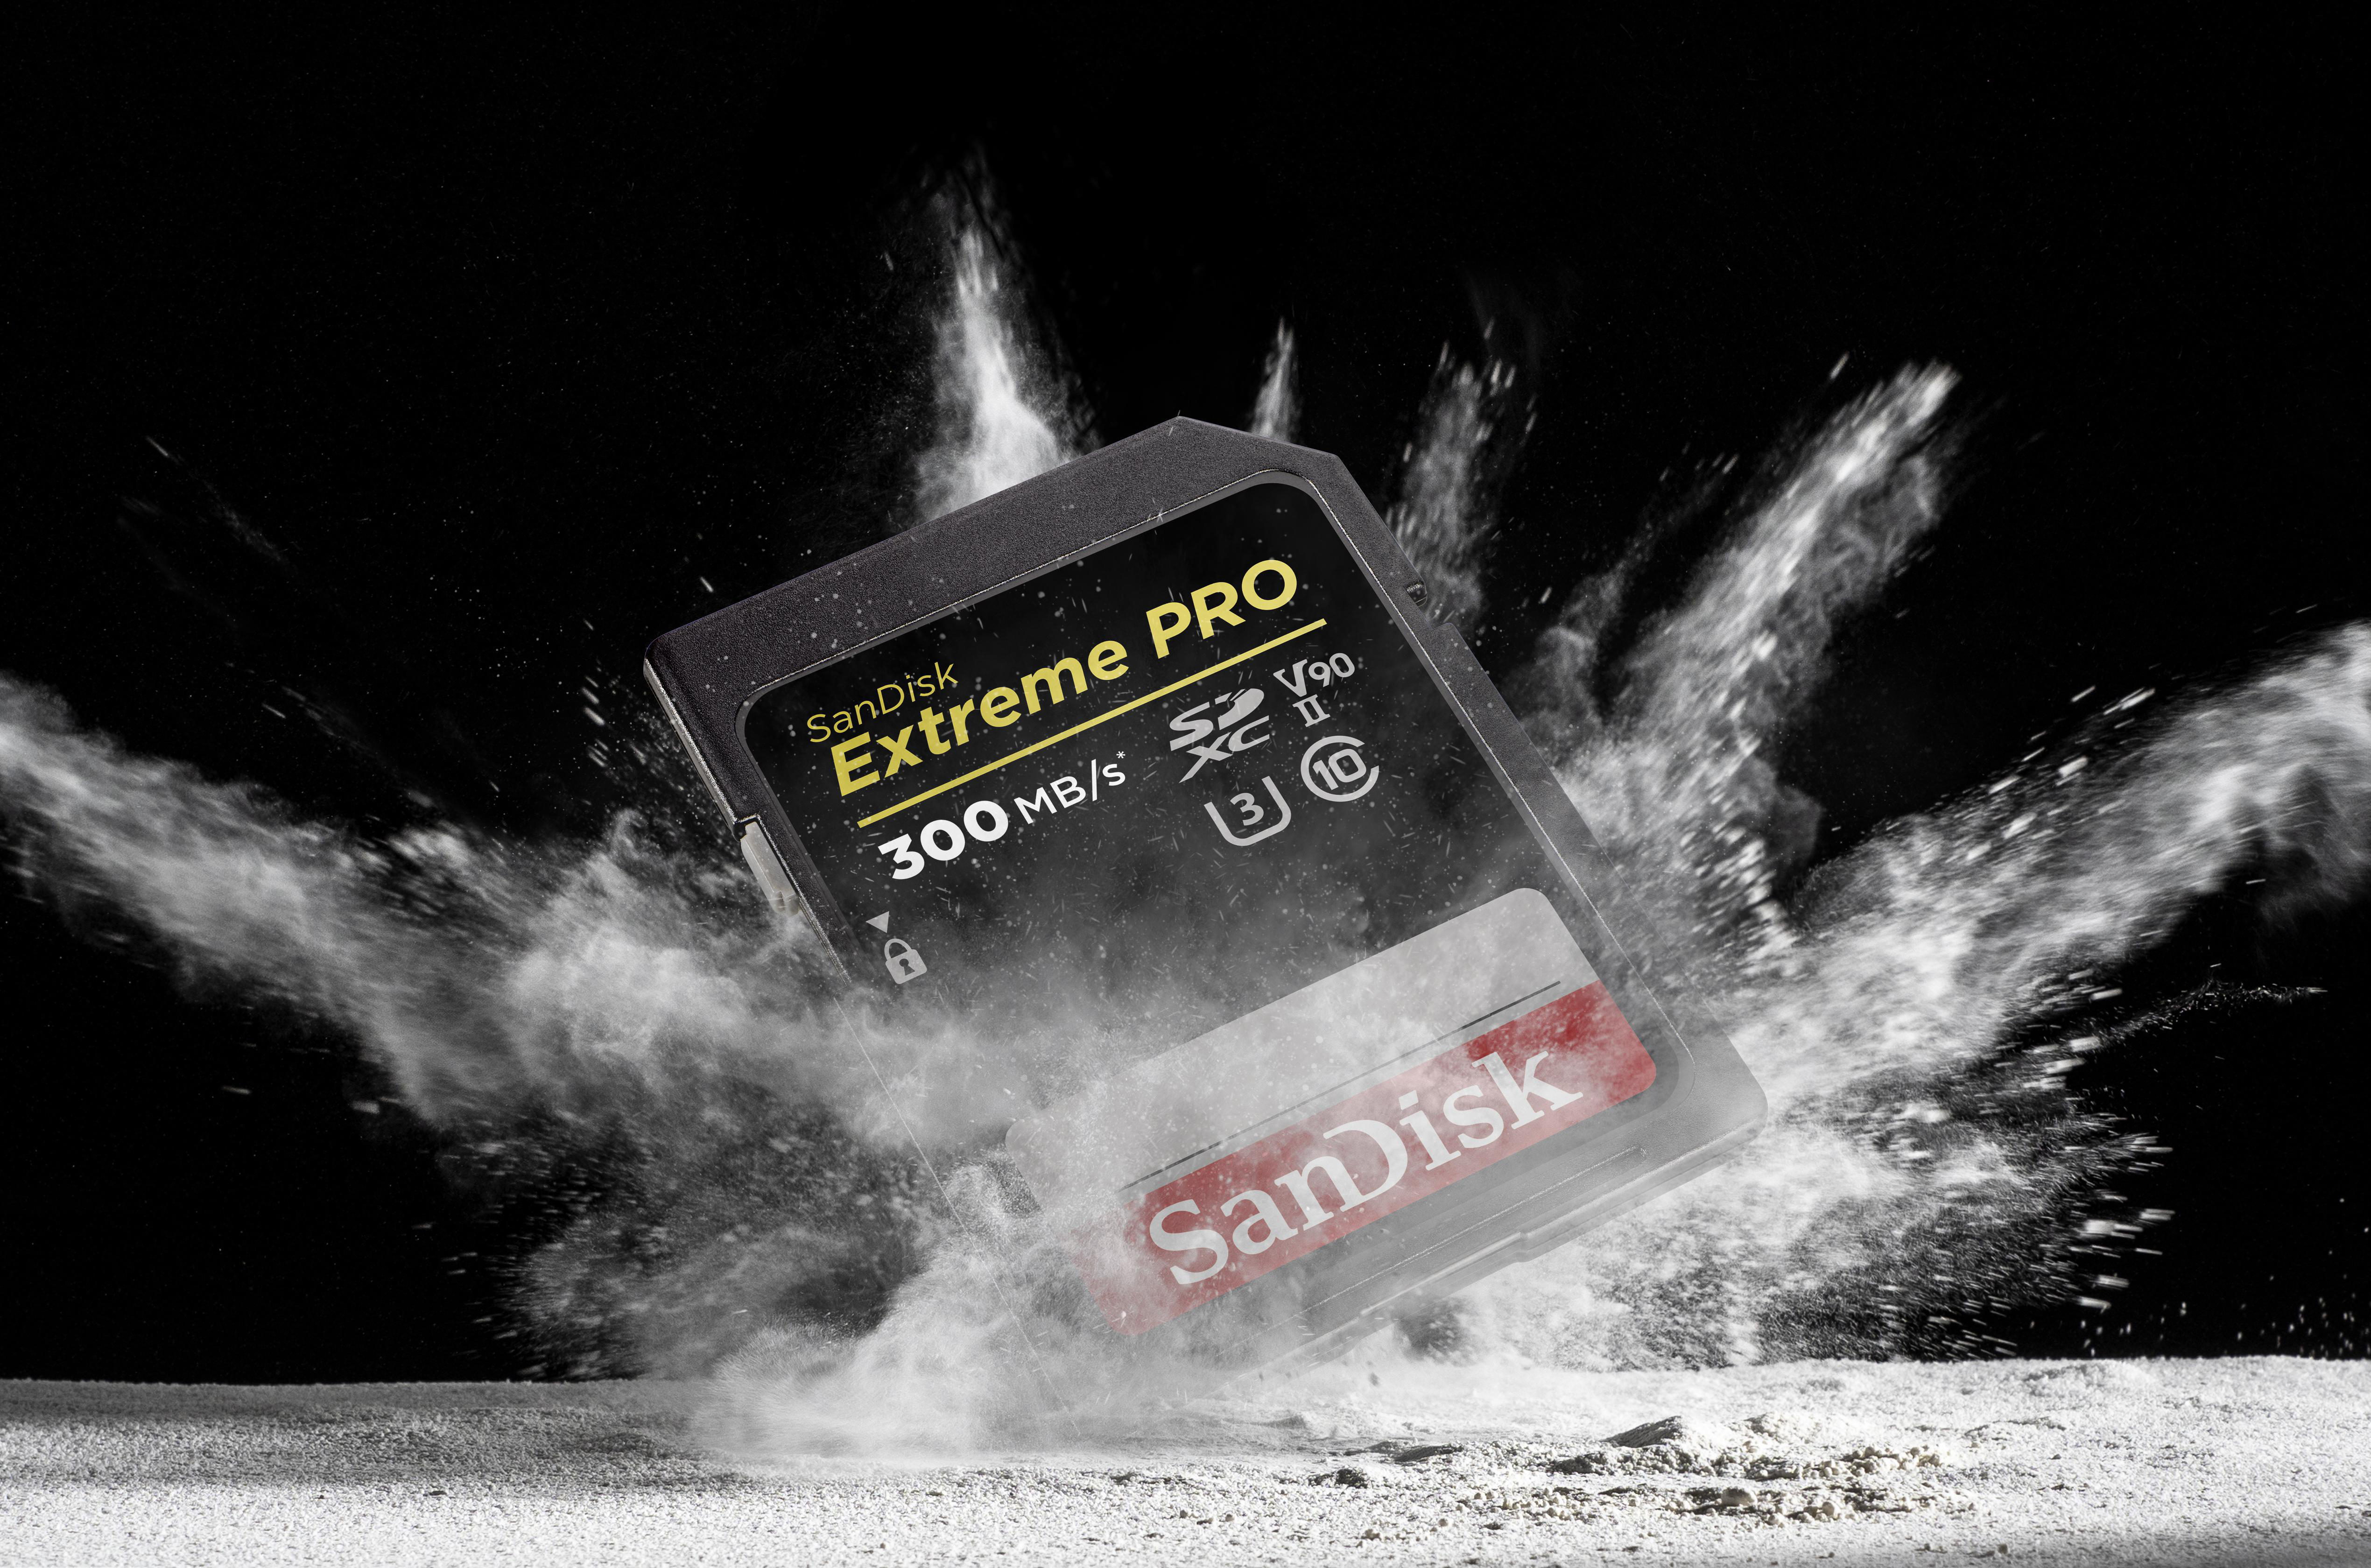 SANDISK Extreme PRO® UHS-II, SDXC 64 300 Speicherkarte, MB/s GB